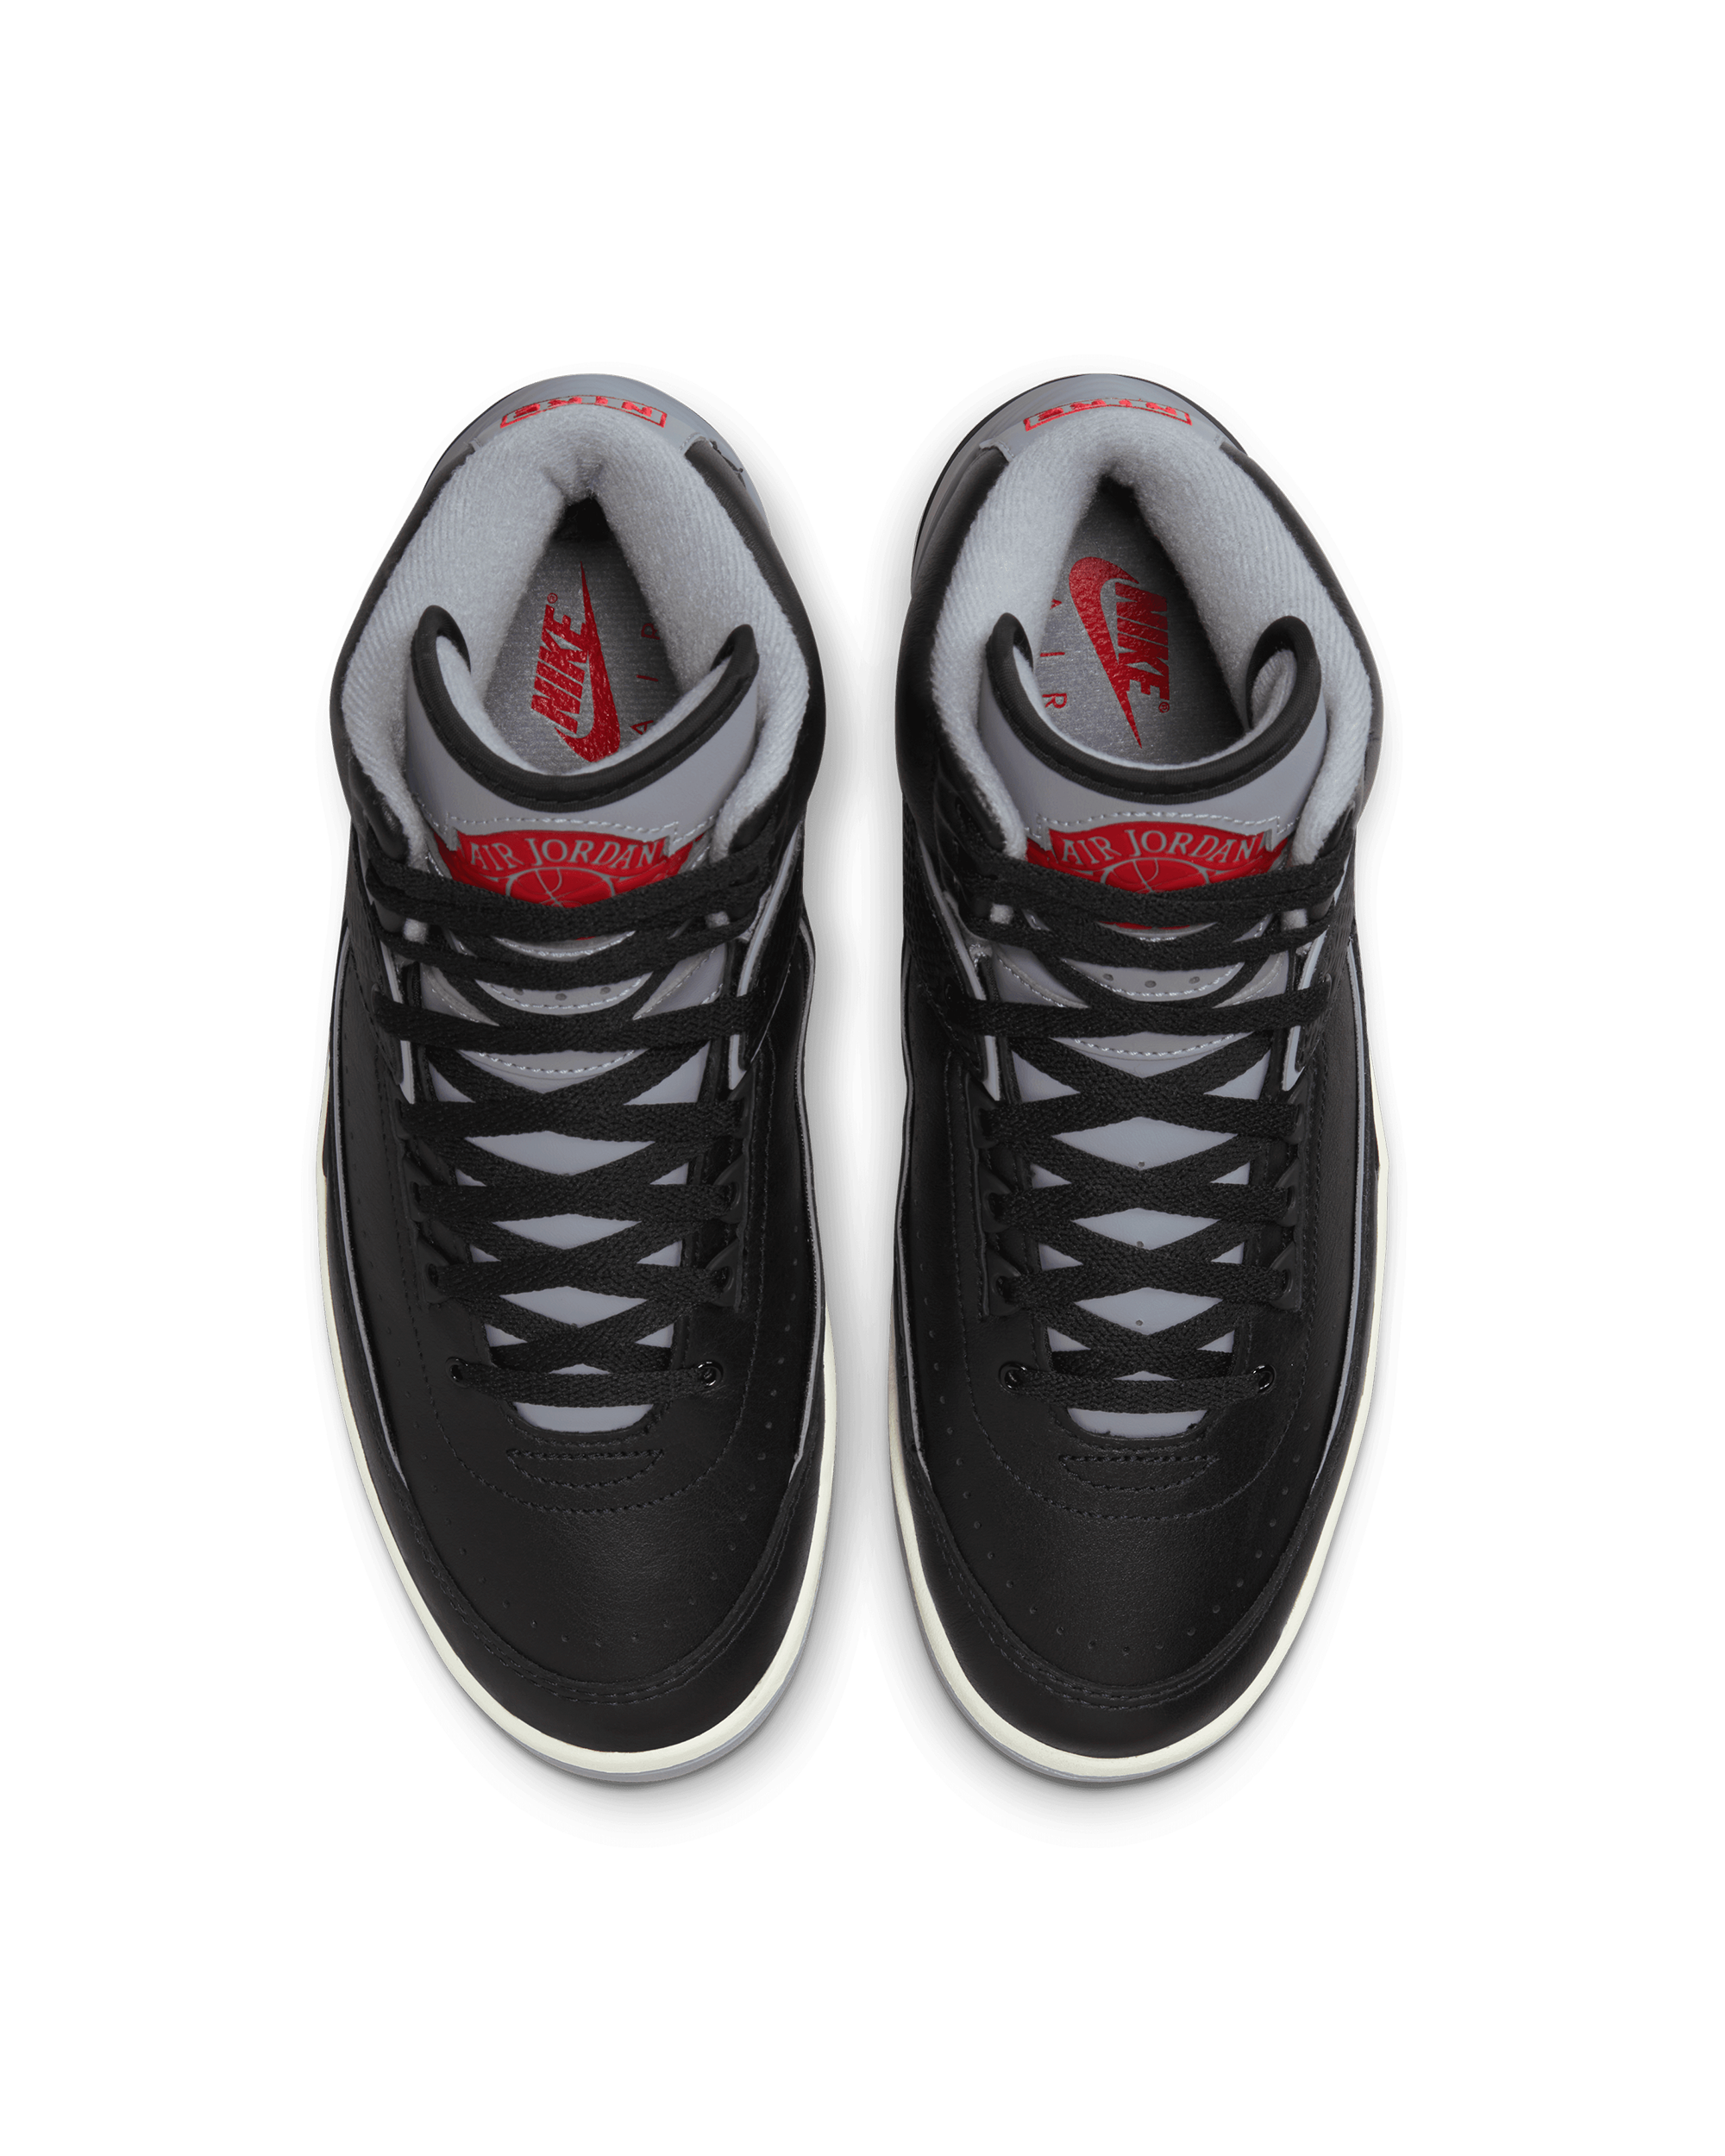 Air Jordan 2 Retro - Black / Cement Grey / Fire Red